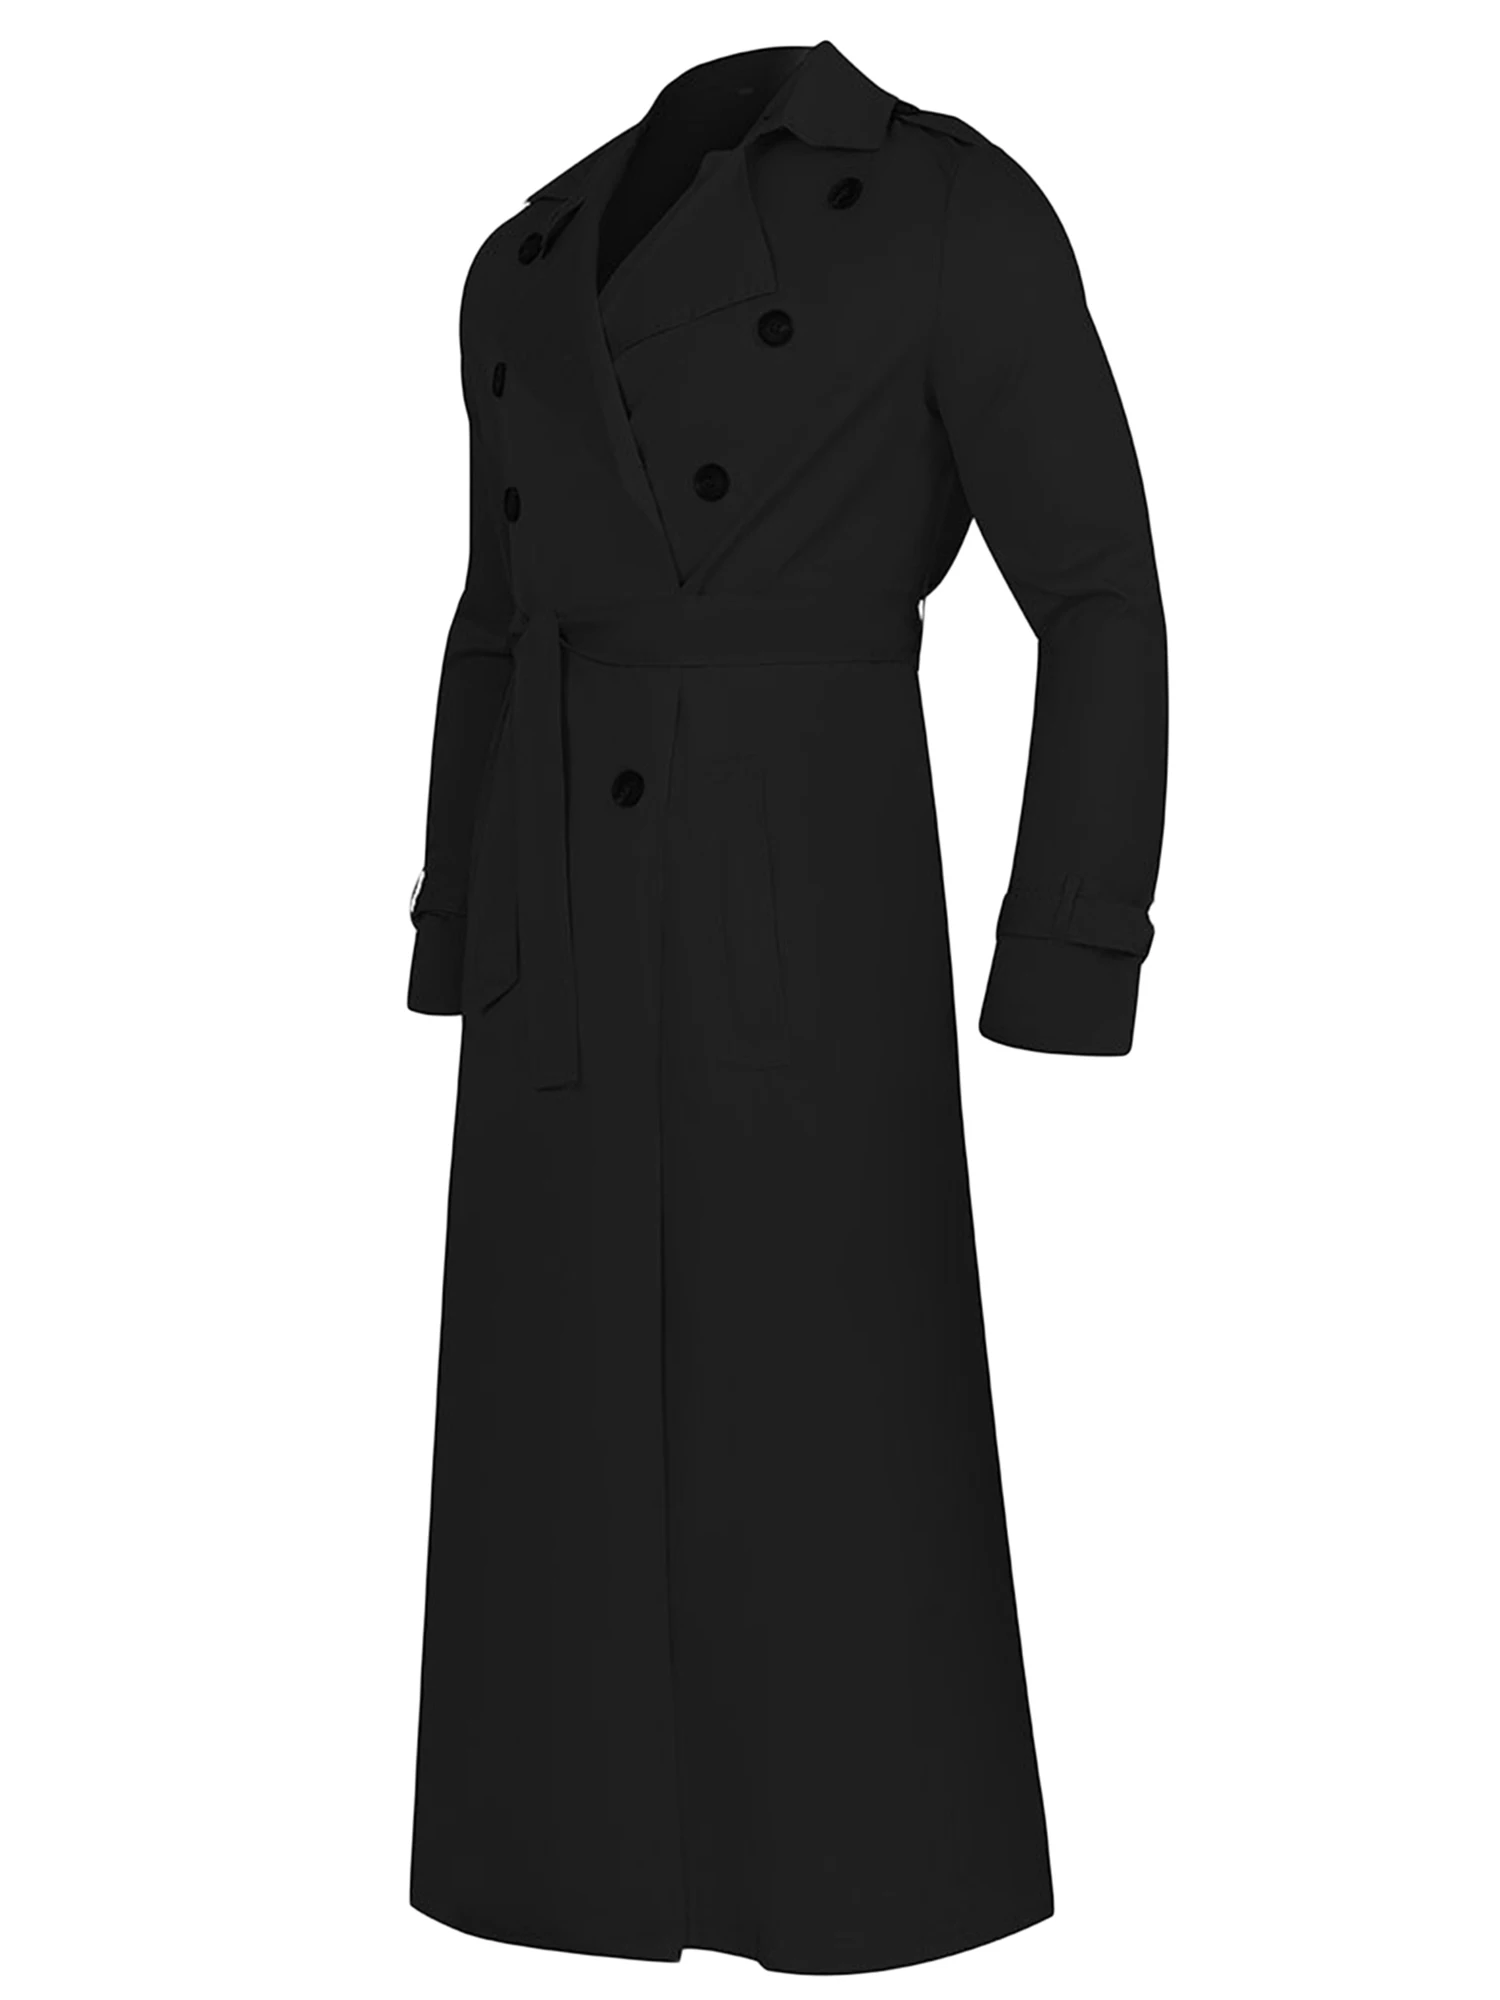 

Jemeigar Women s Oversized Belted Trench Coats Casual Windbreaker Lapel Long Jacket Overcoats for Juniors